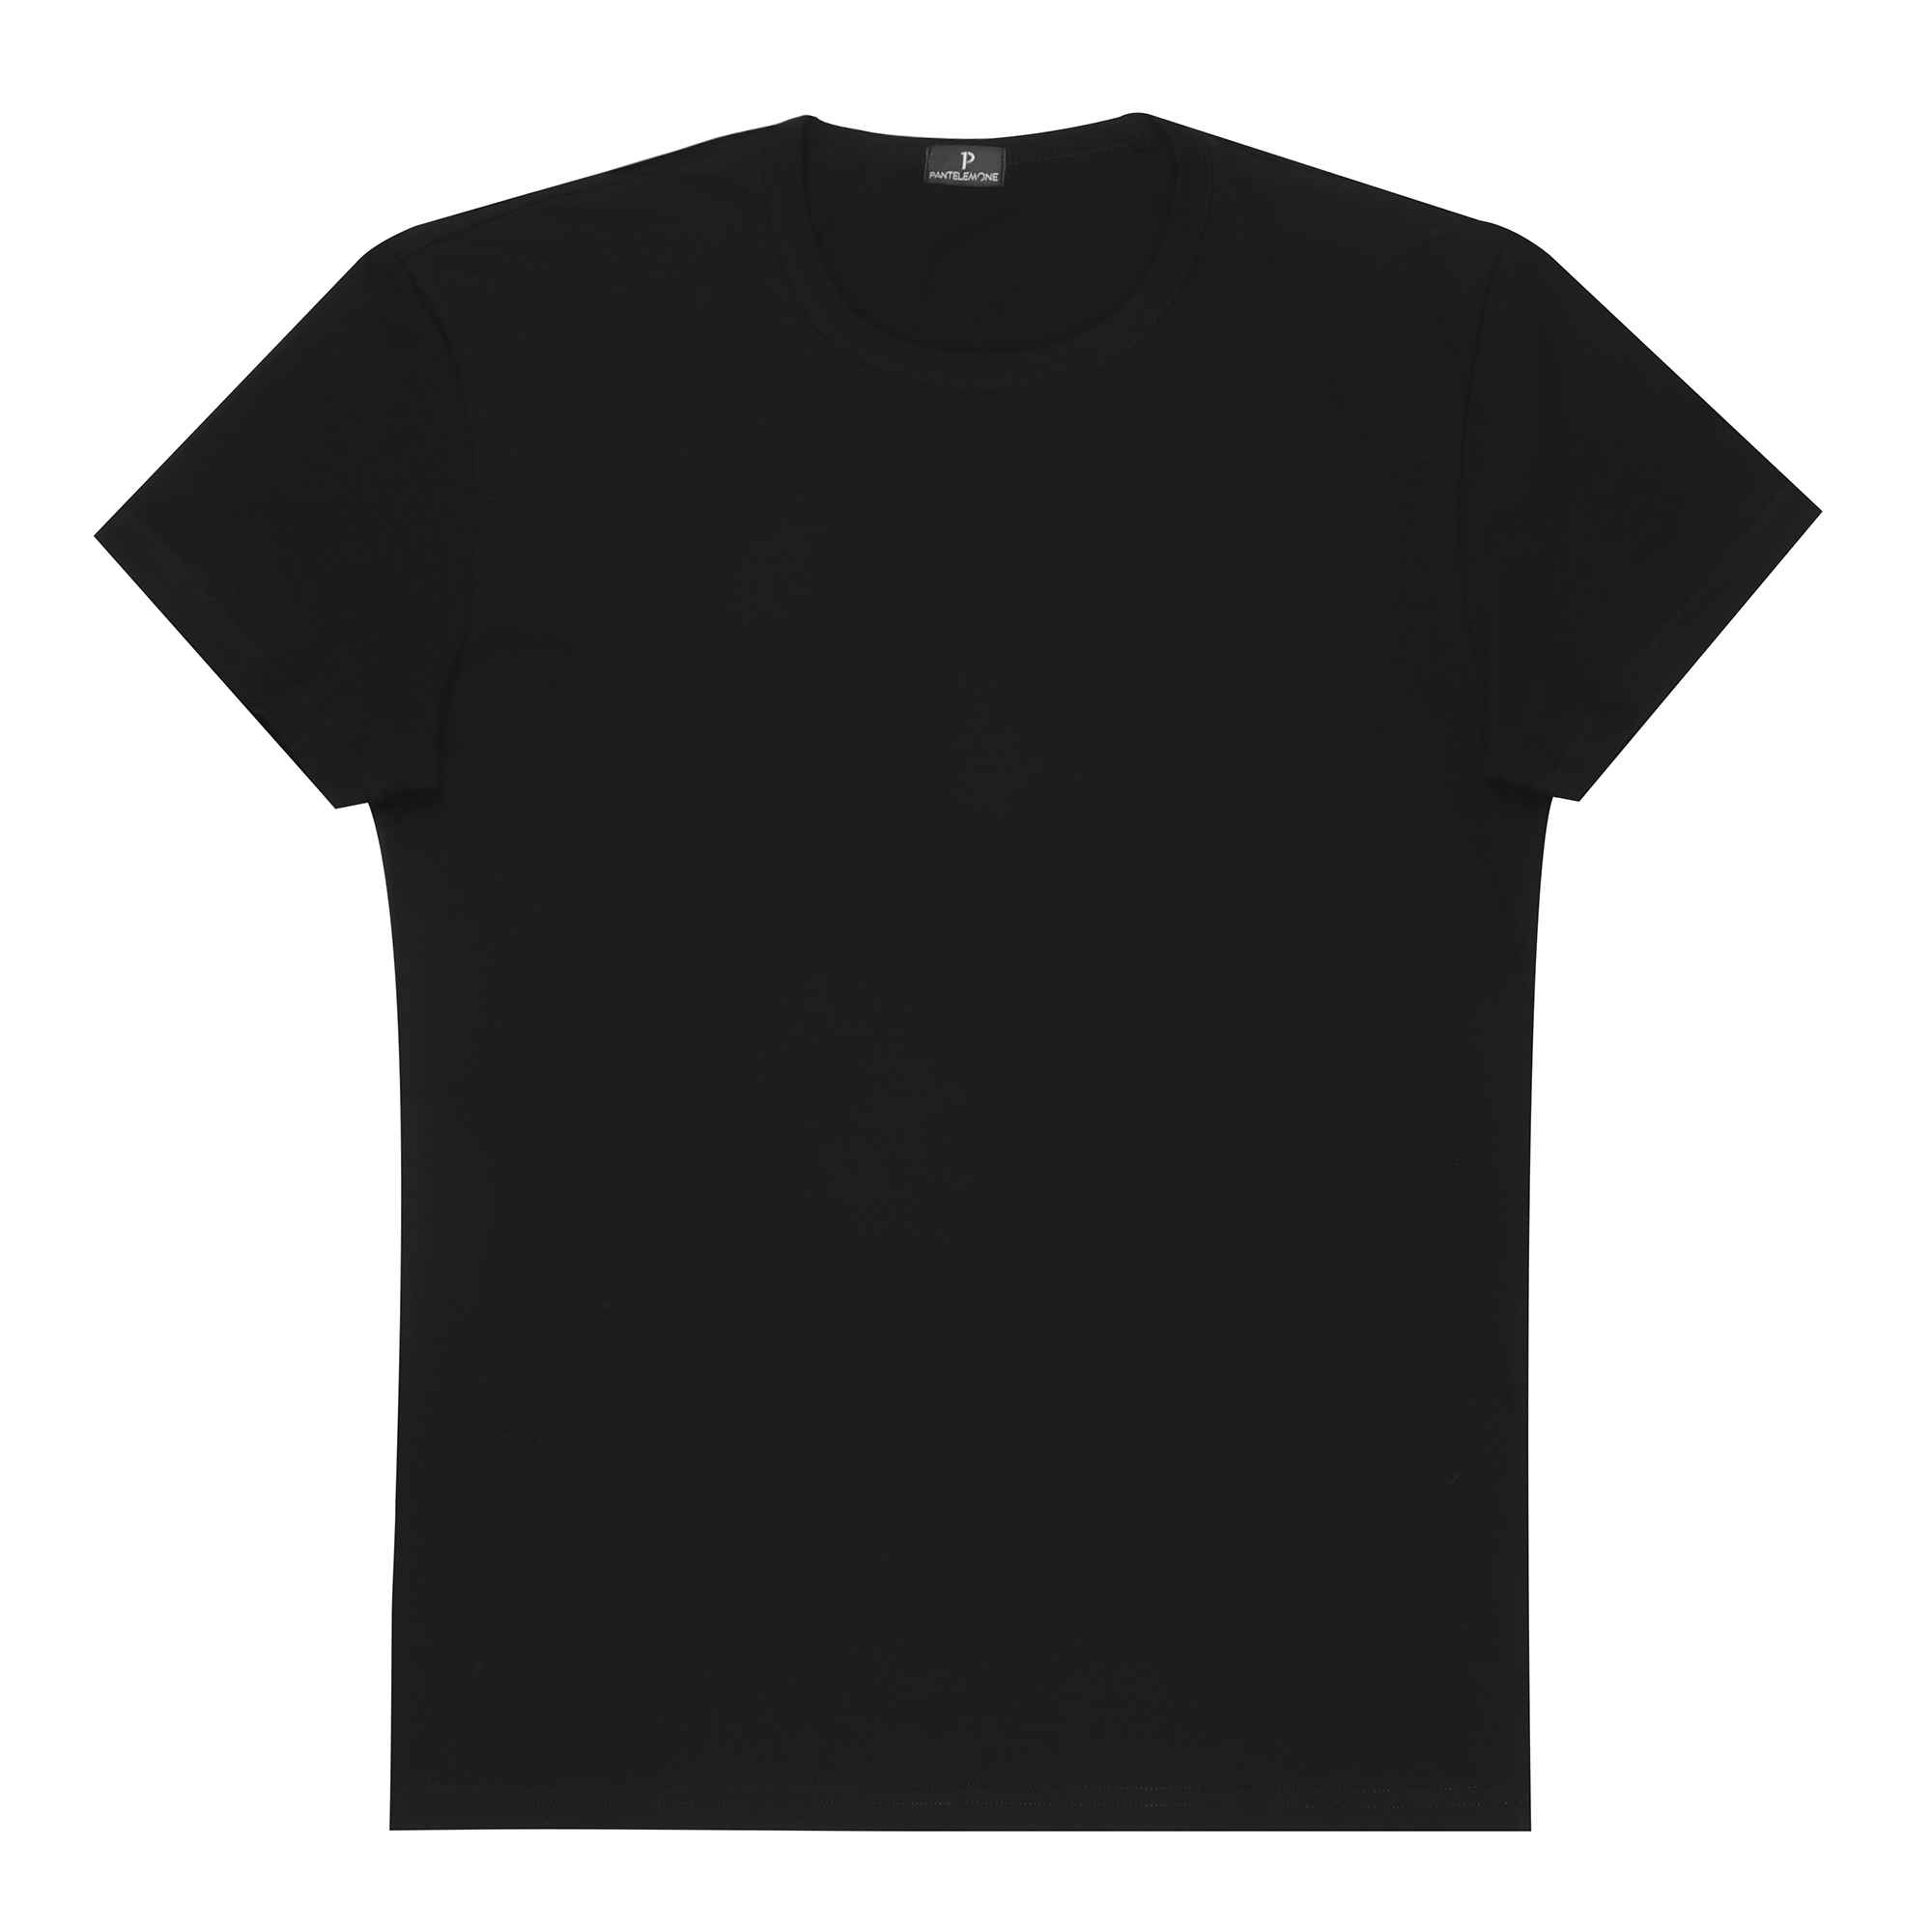 Мужская футболка Pantelemone MF-914 48 черная, цвет черный, размер 48 - фото 1